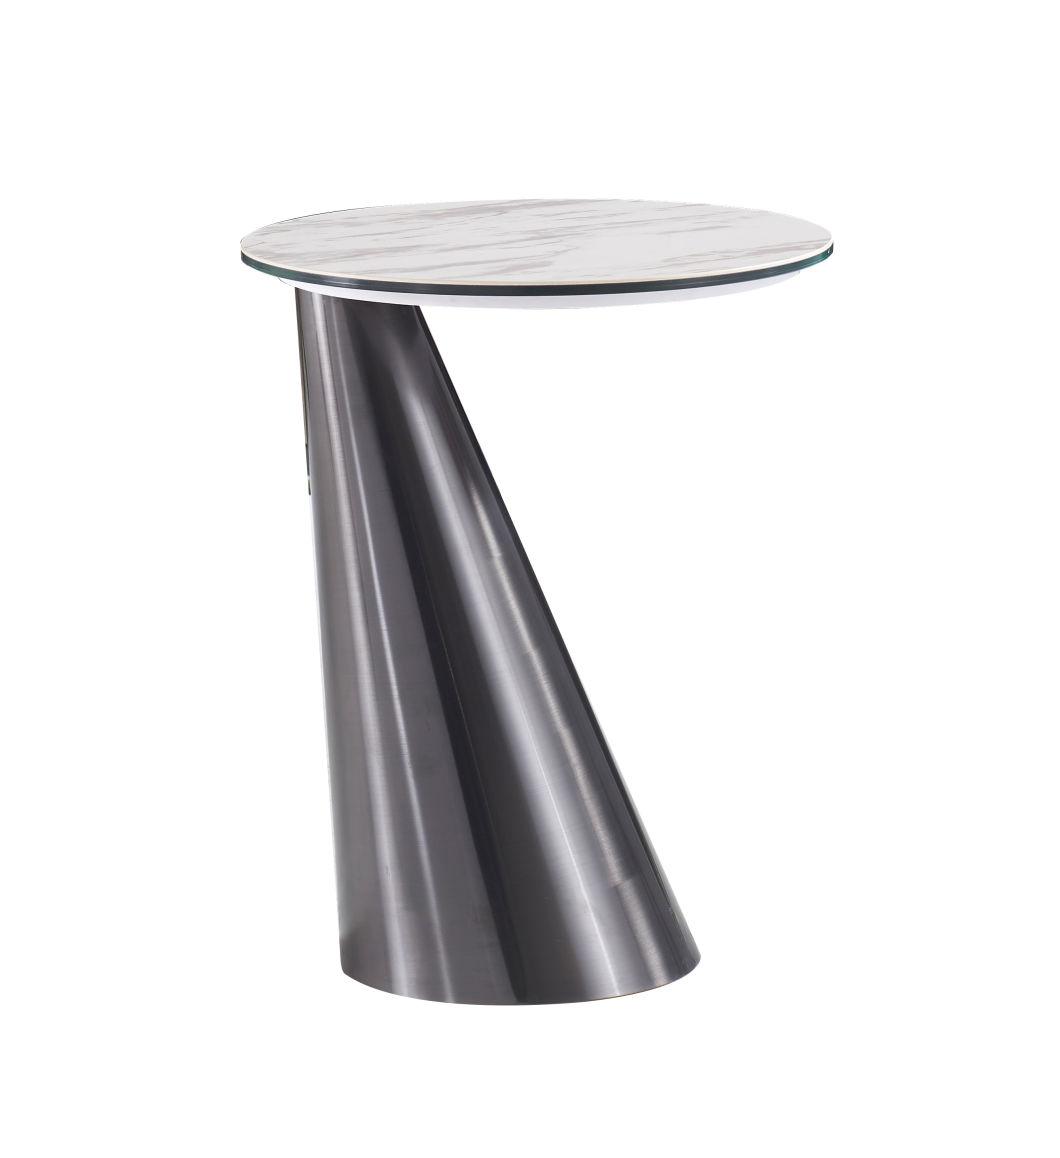 Cj-012 Ceramic Coffee Table /Round Coffee Table/Home Furniture /Hotel Furniture/Living Room Furniture